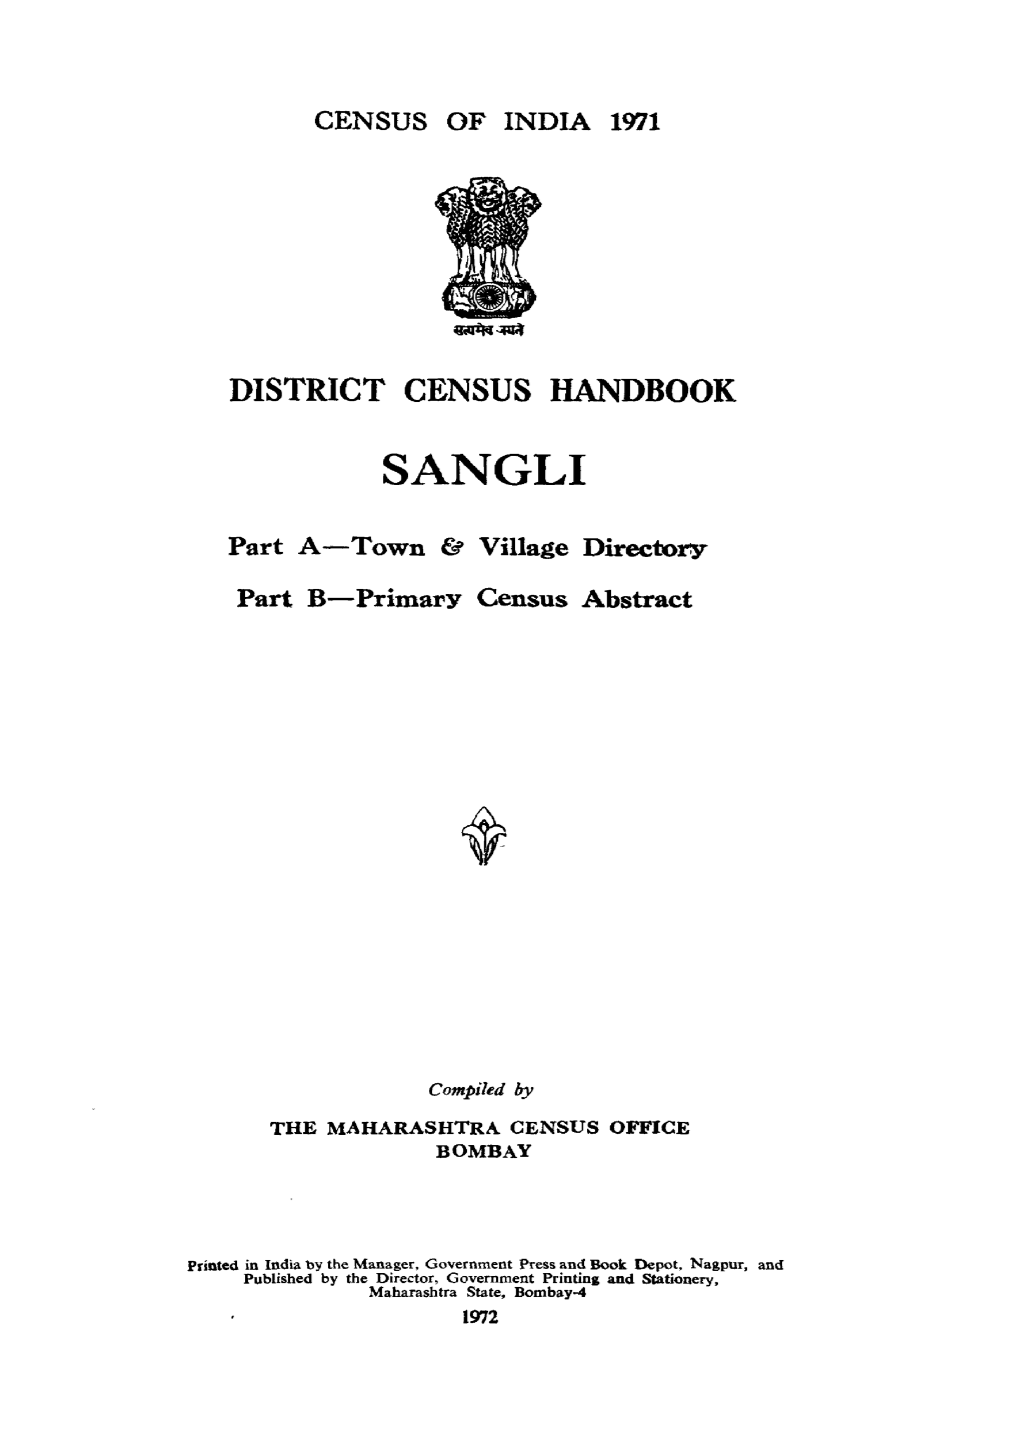 District Census Handbook, Sangli, Part